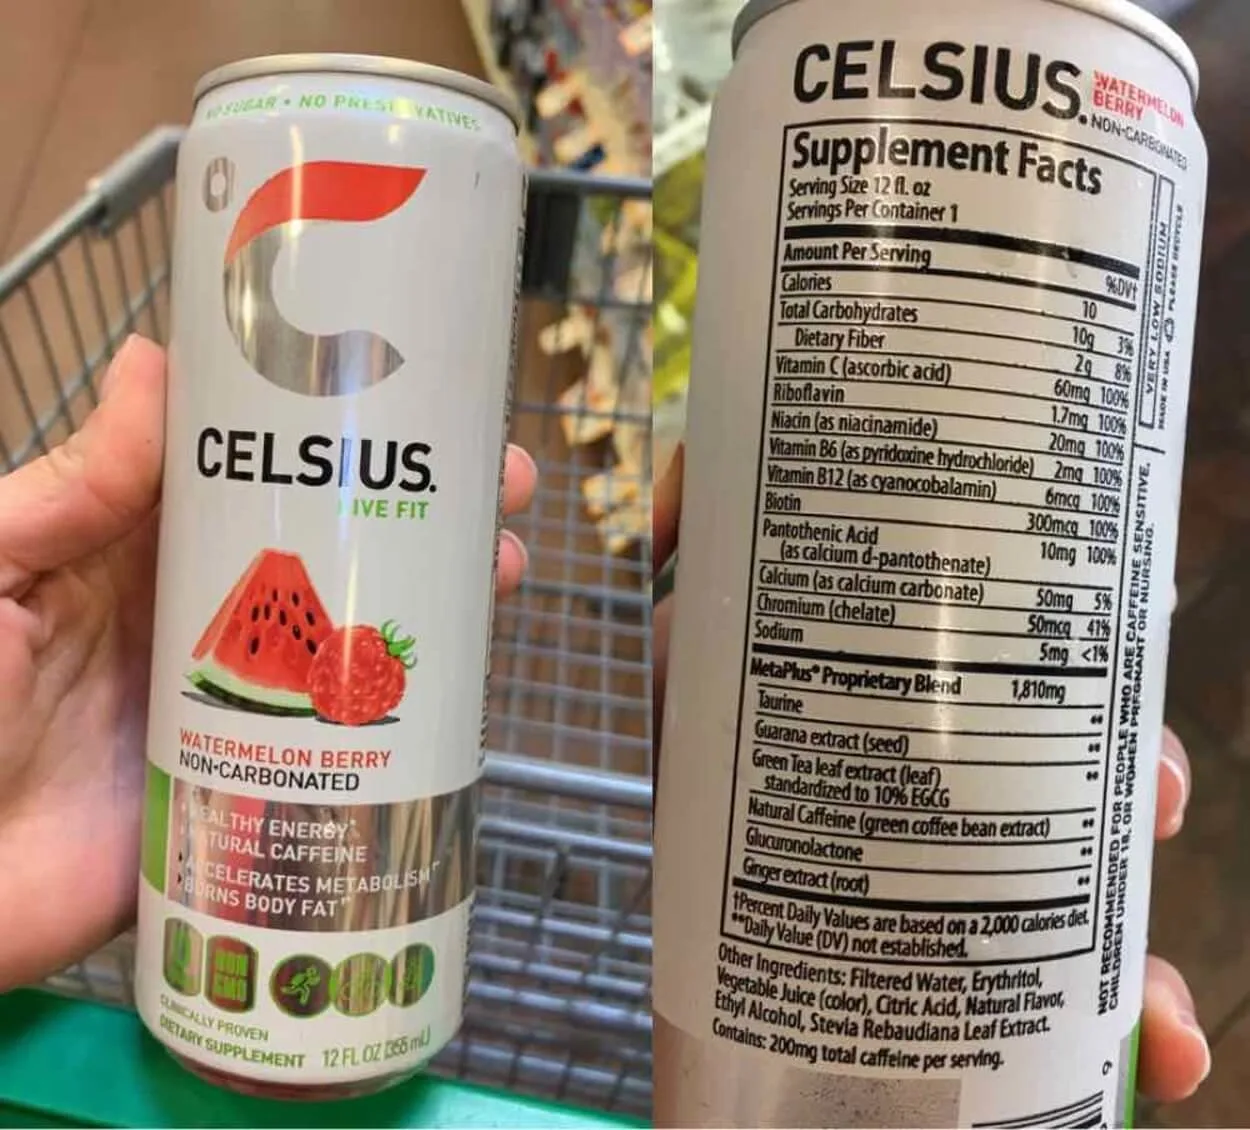 Image of Celsius ingredient label.